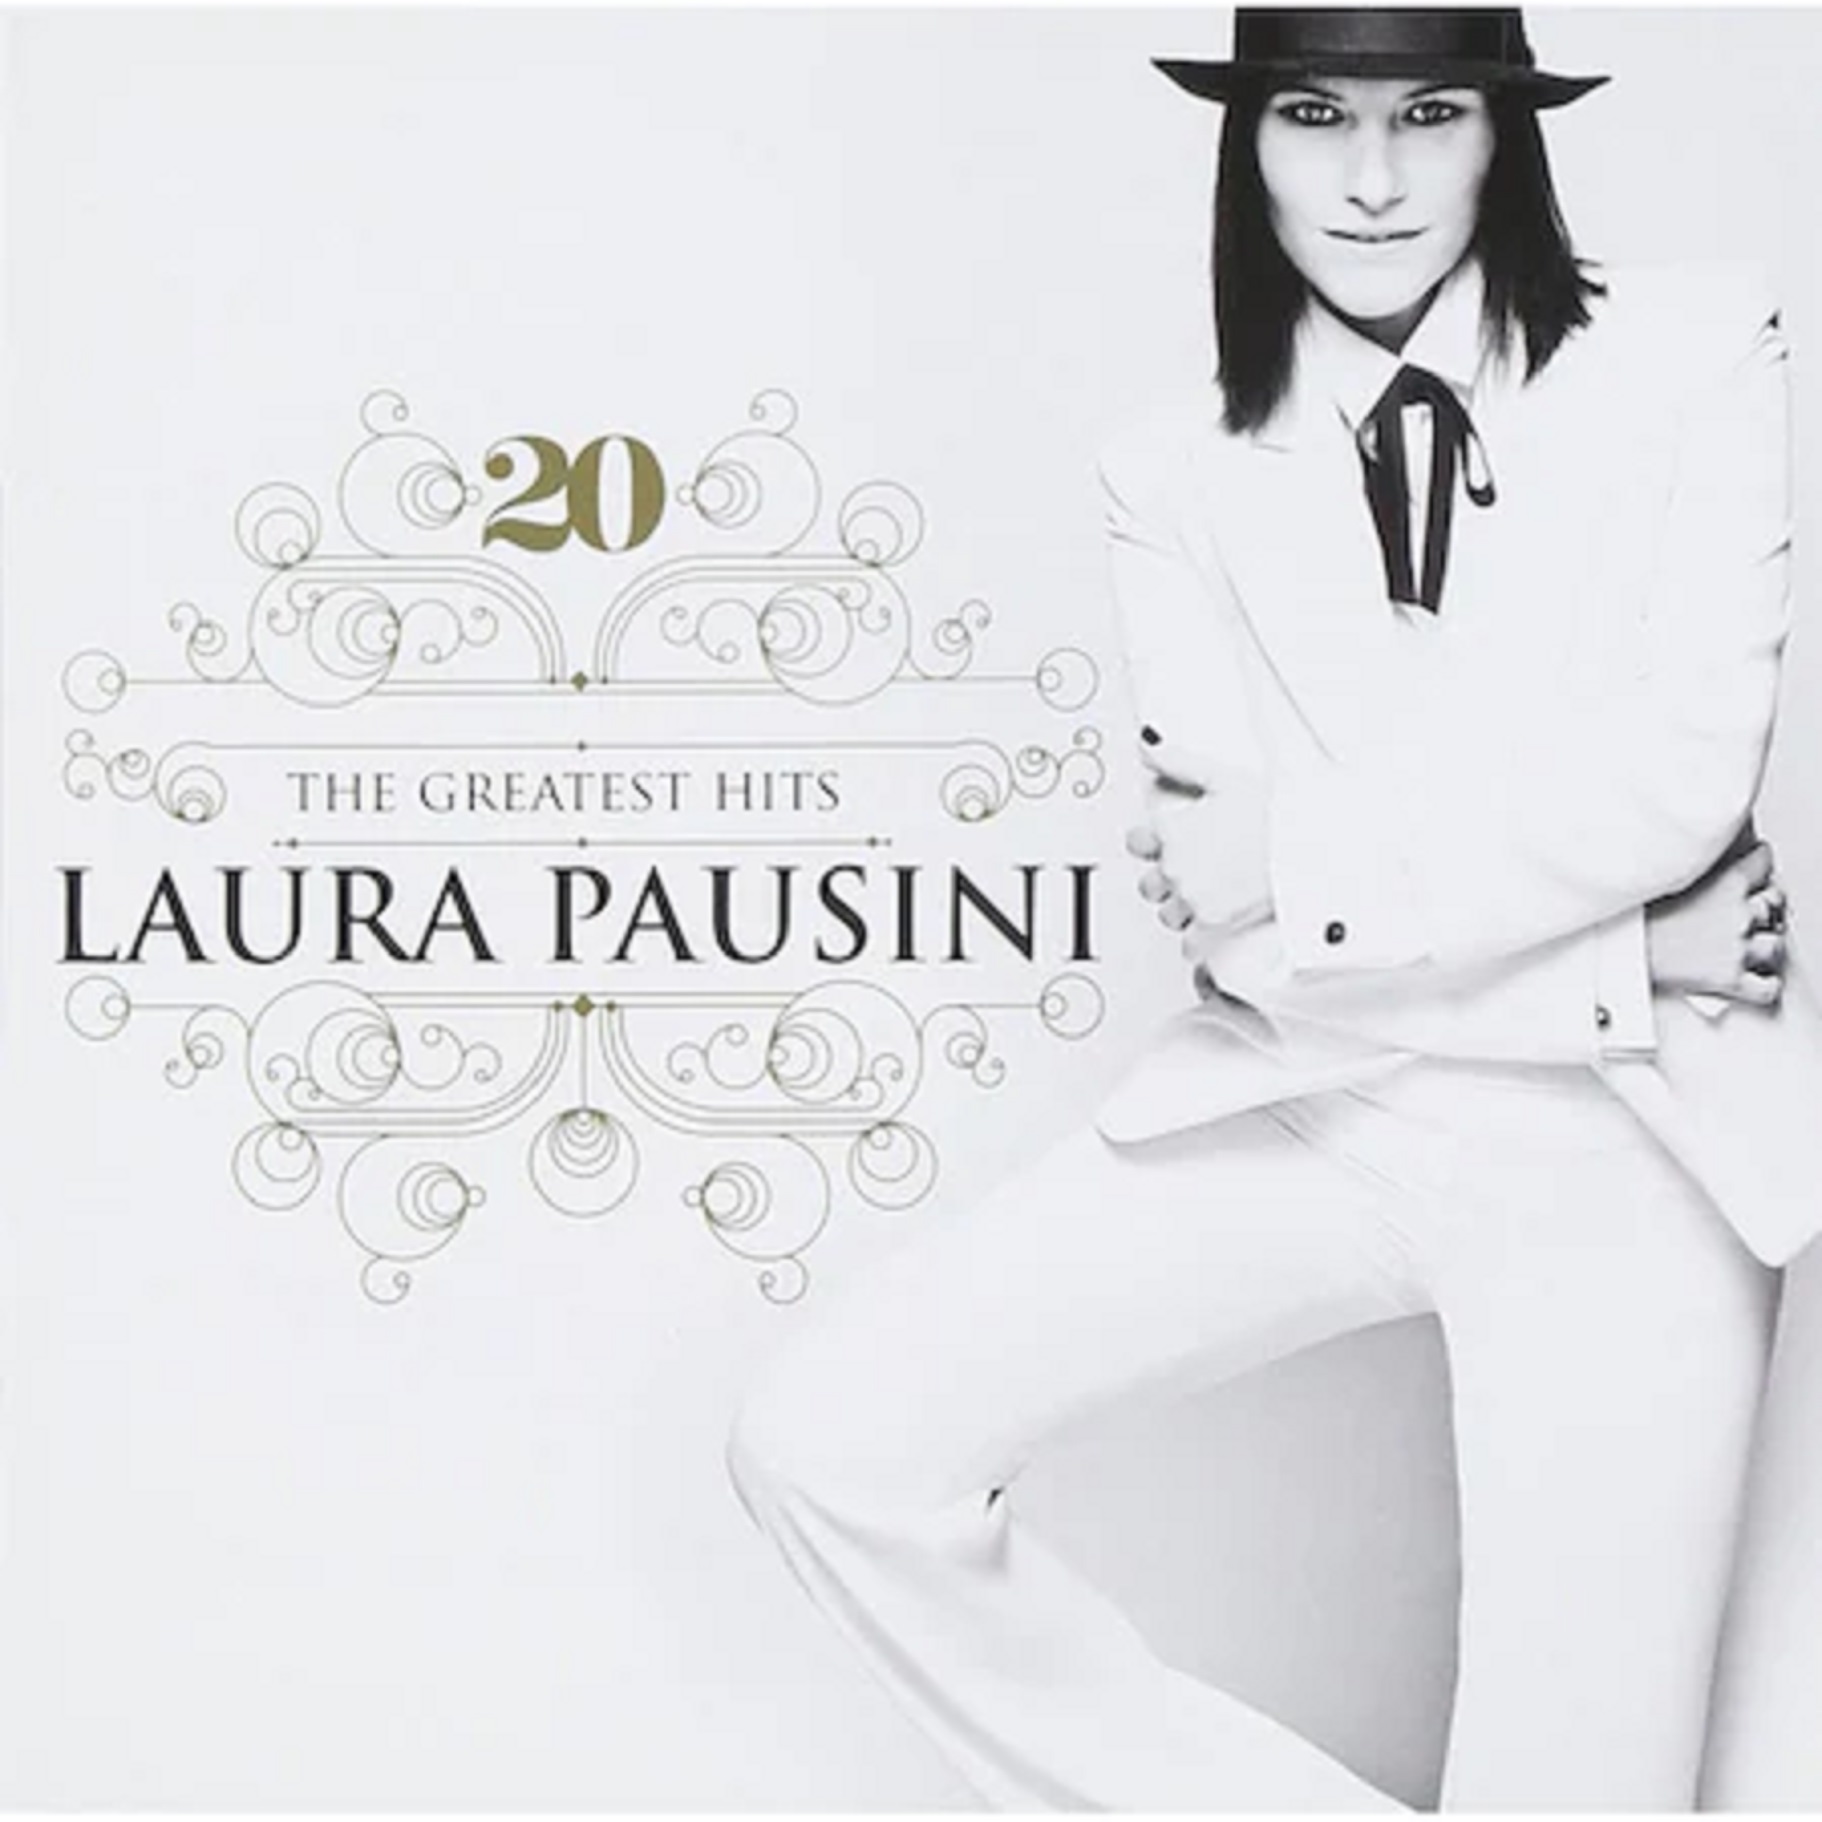 20 The Greatest Hits | Laura Pausini image0